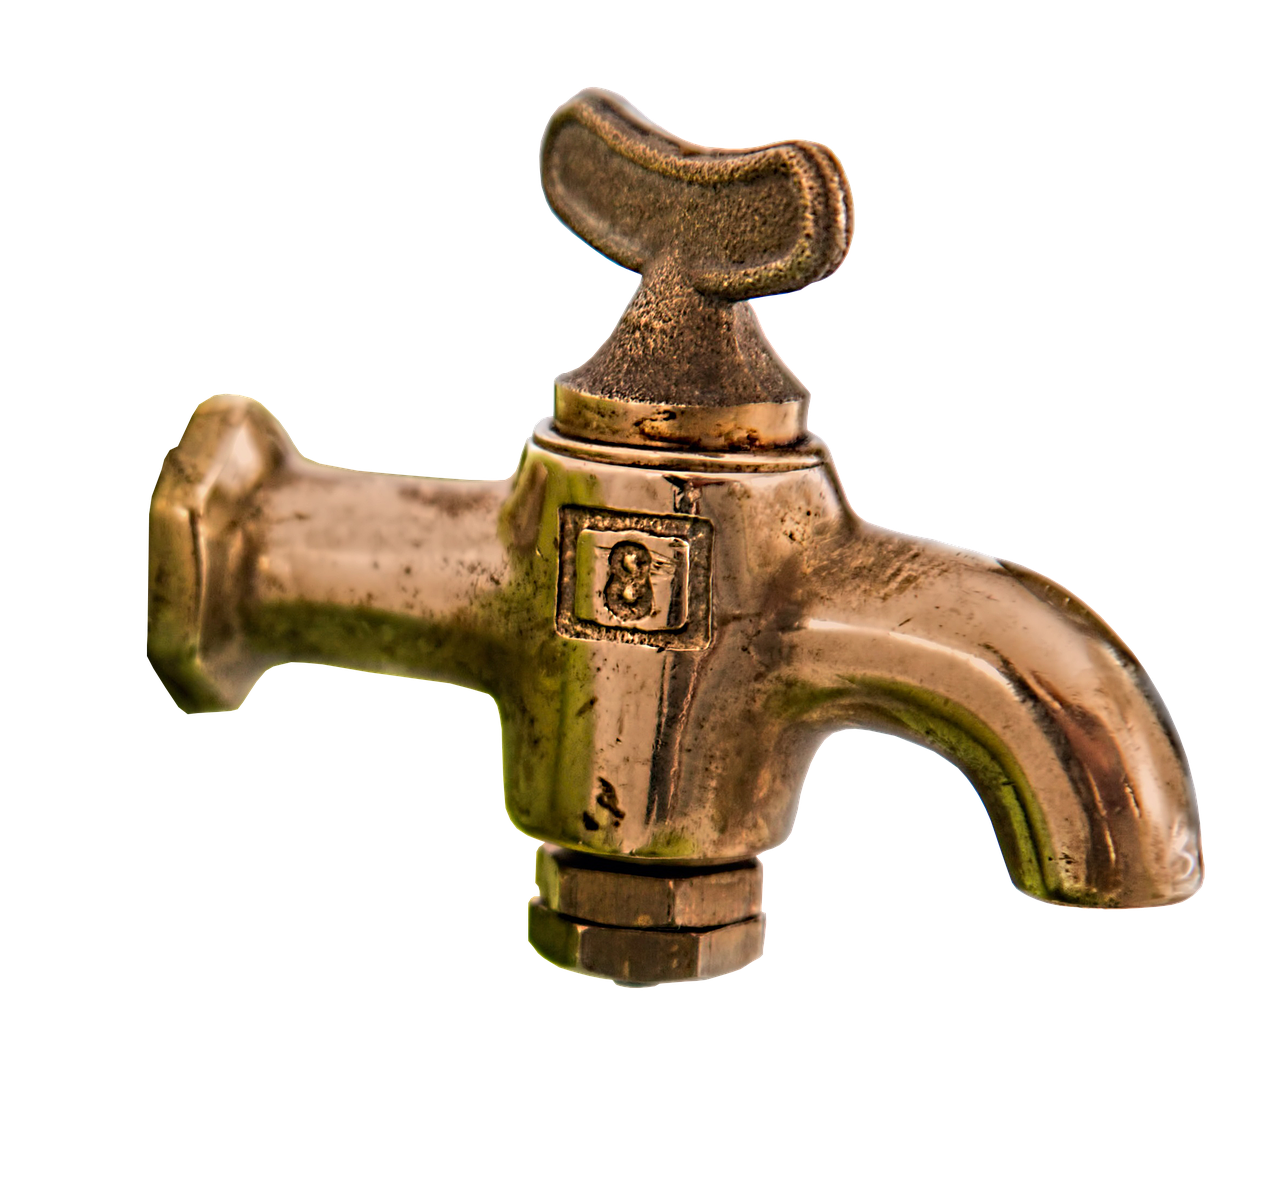 tap brass brass faucet free photo